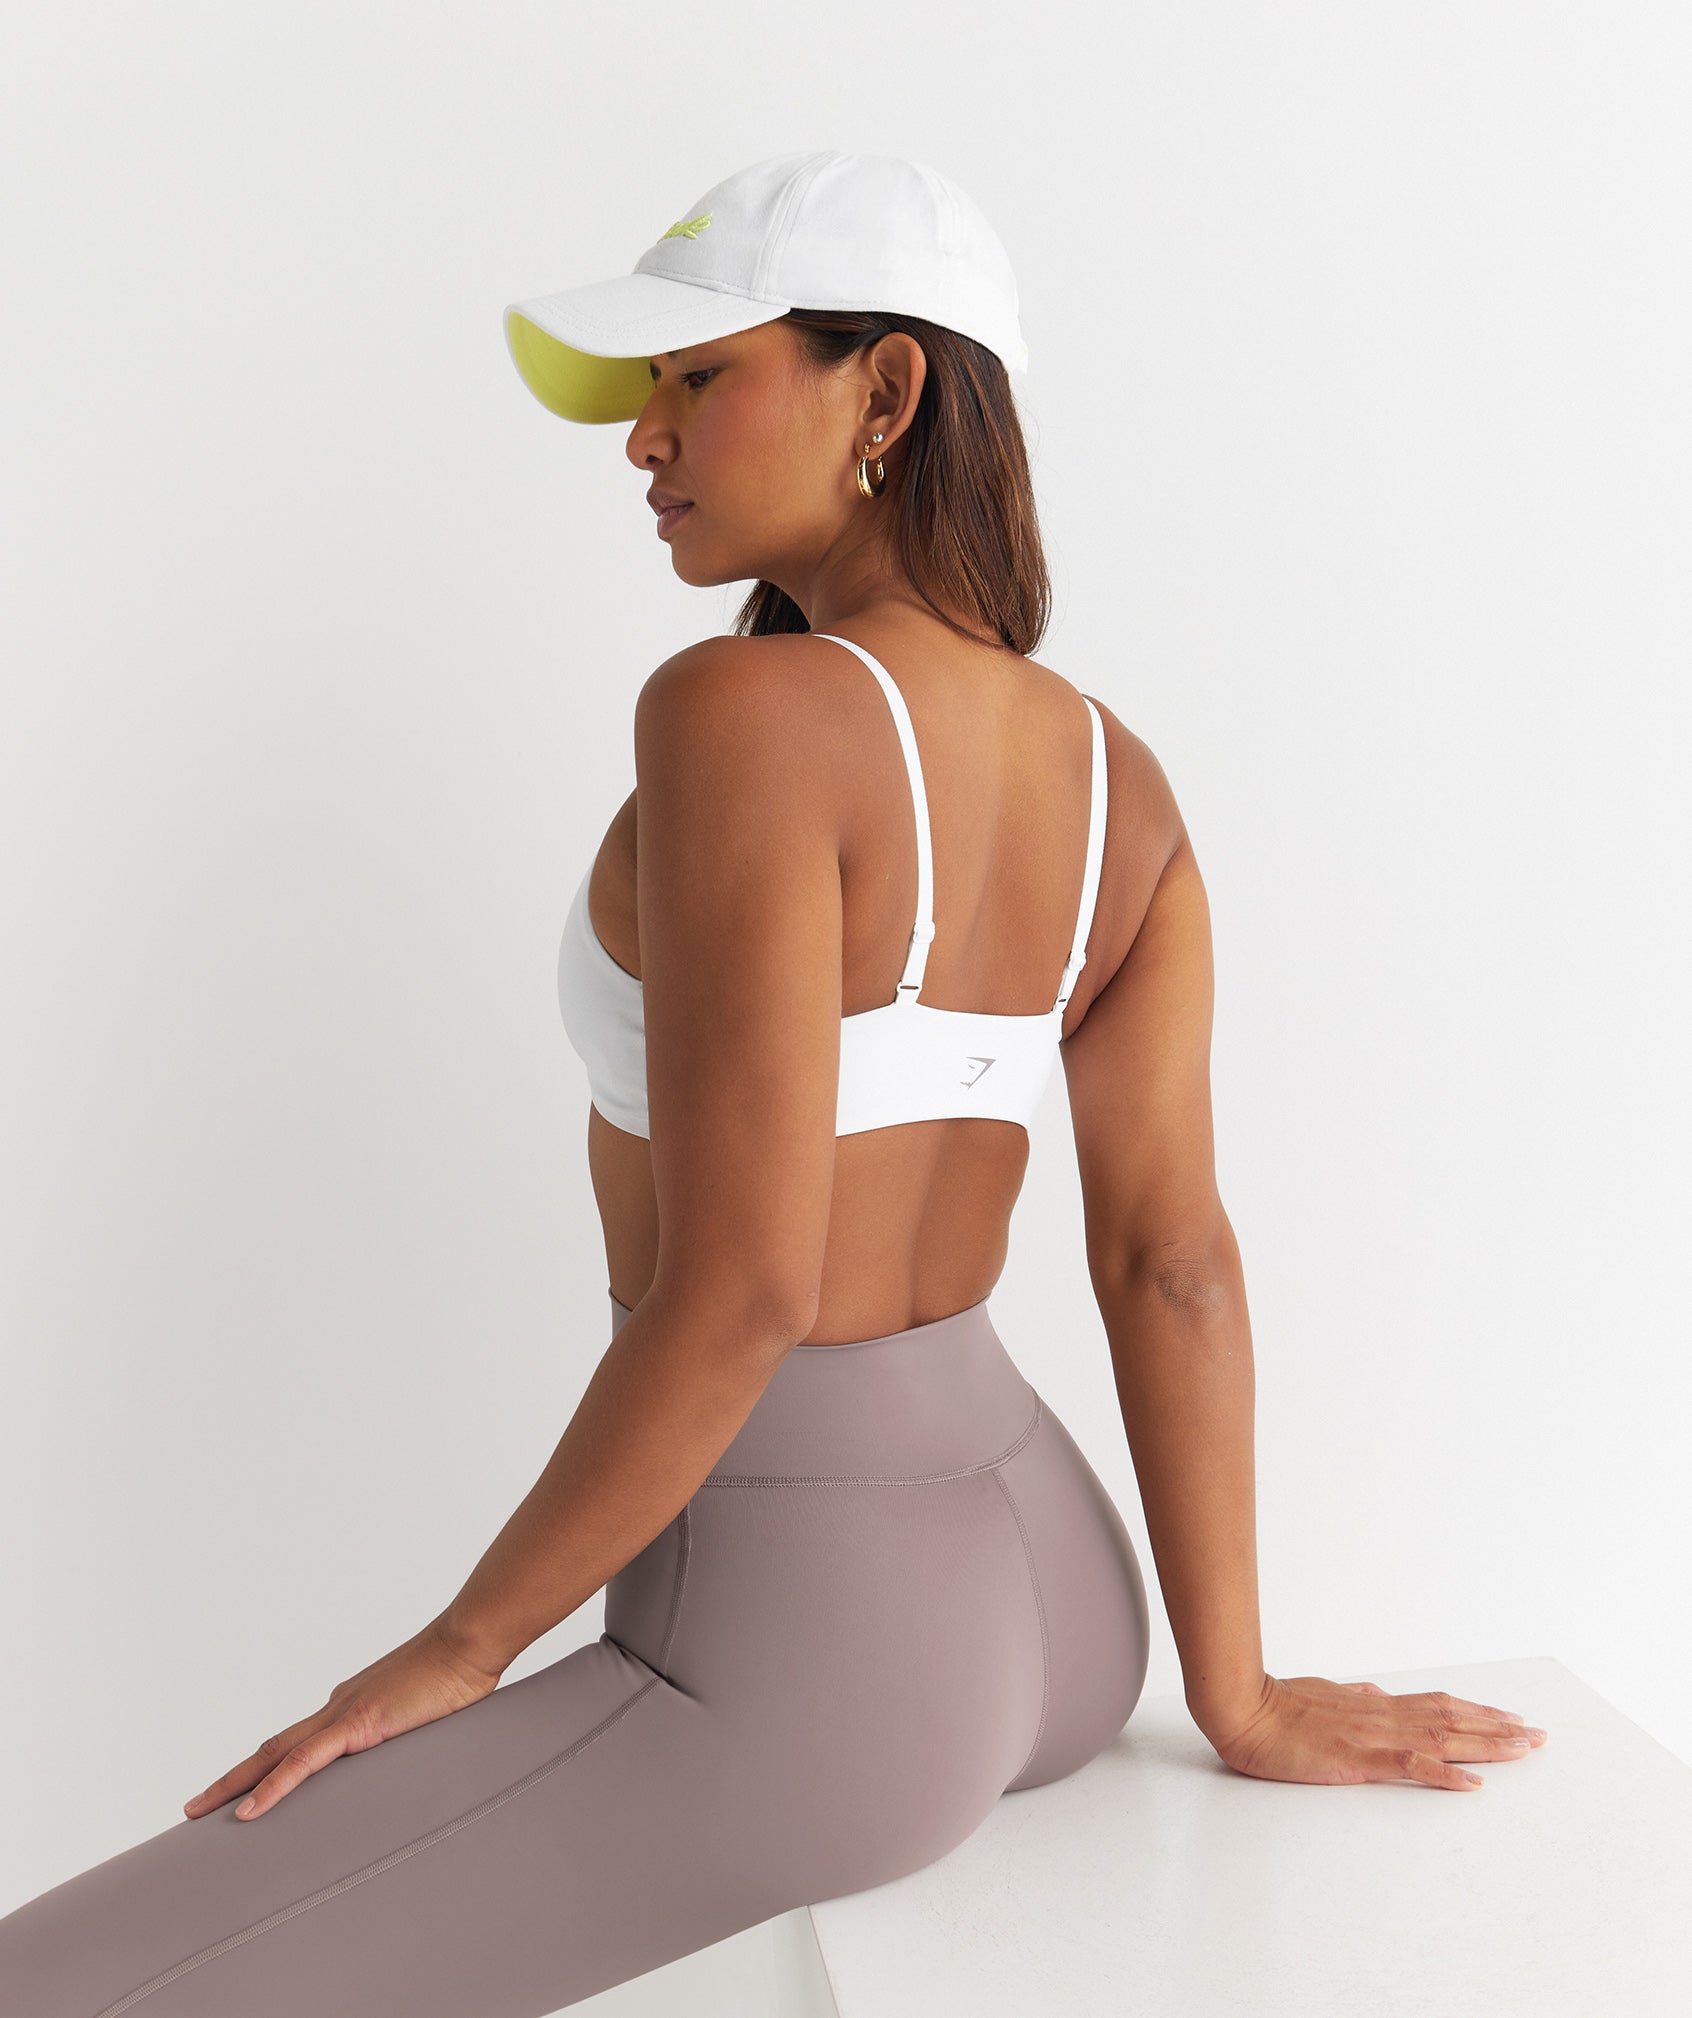 Yoga Outfits Sport Gym Sexy Crop Top Fitness Women Shirt Sports Bra  Sportswear Workout Wear Woman Tops Clothing Open Back Sleeveless From  Nicebetter, $53.82